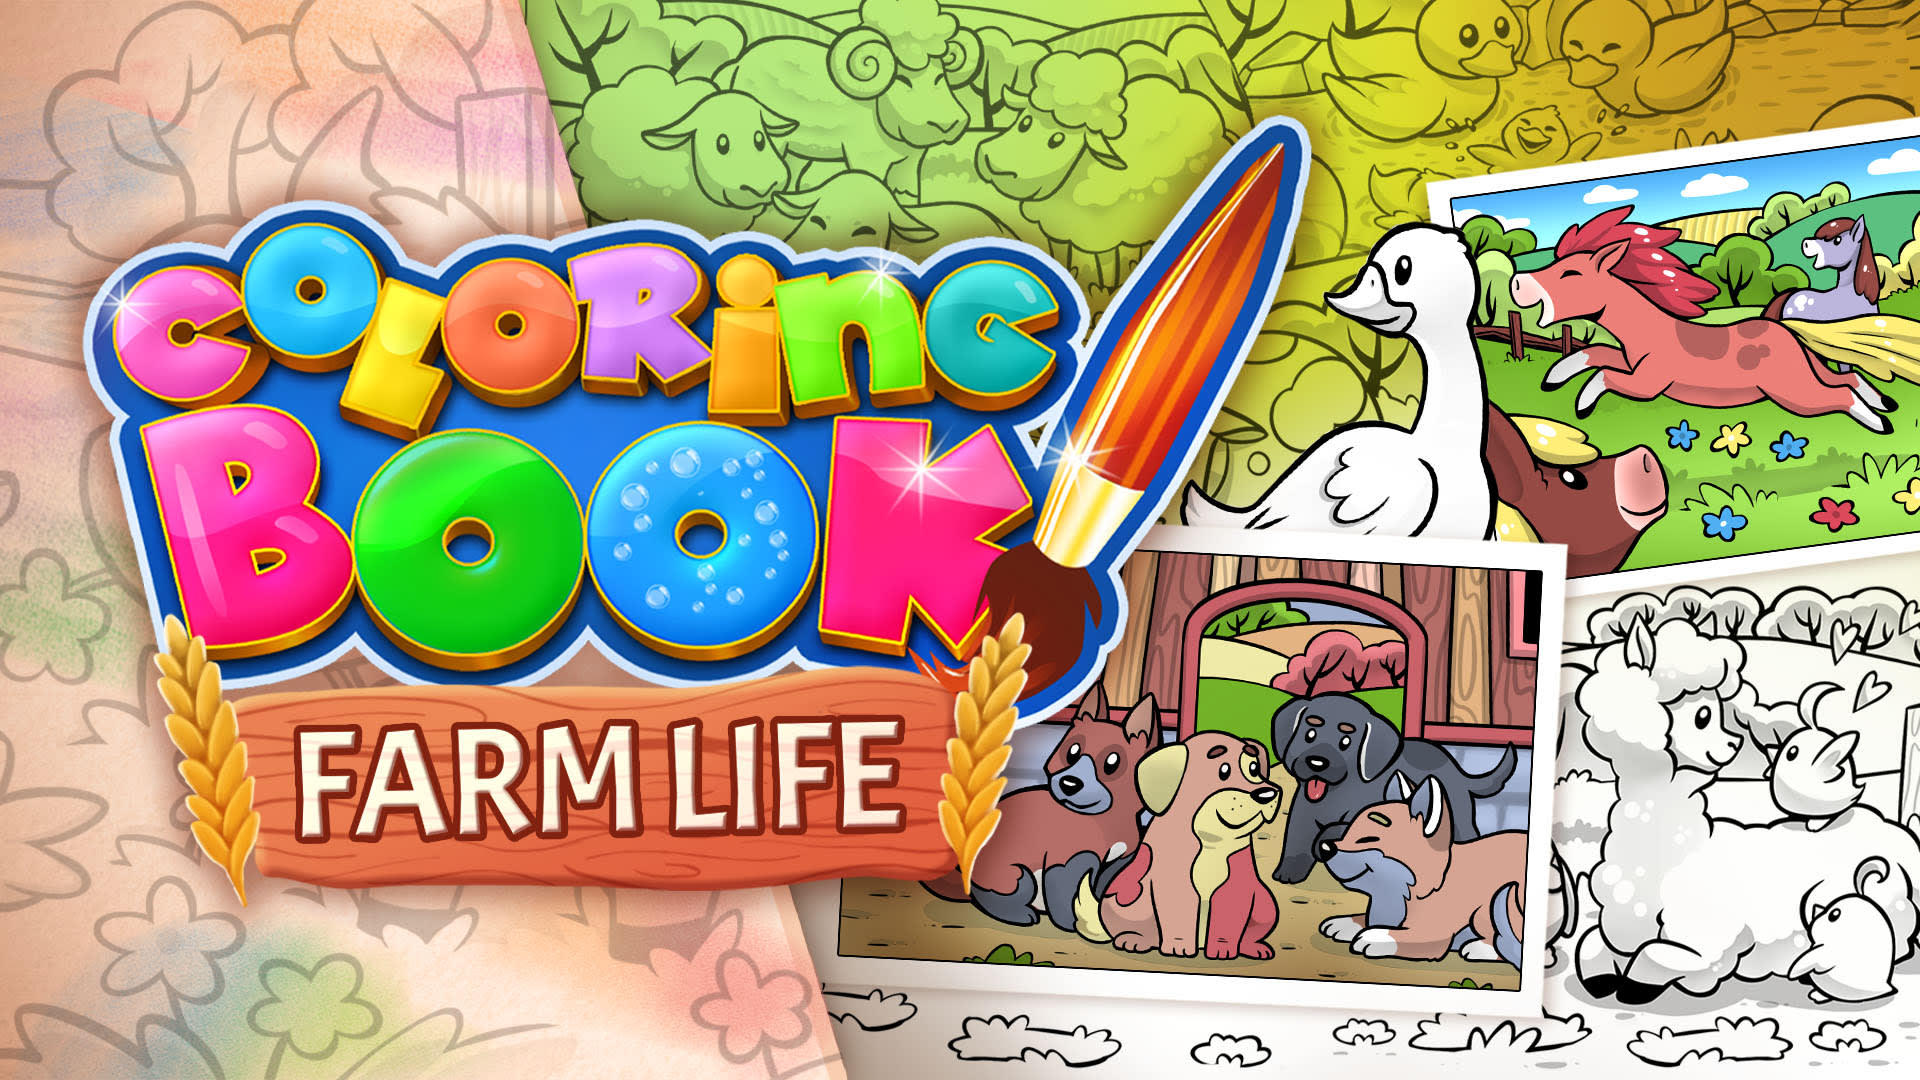 Coloring Book: Farm Life - 29 new drawings